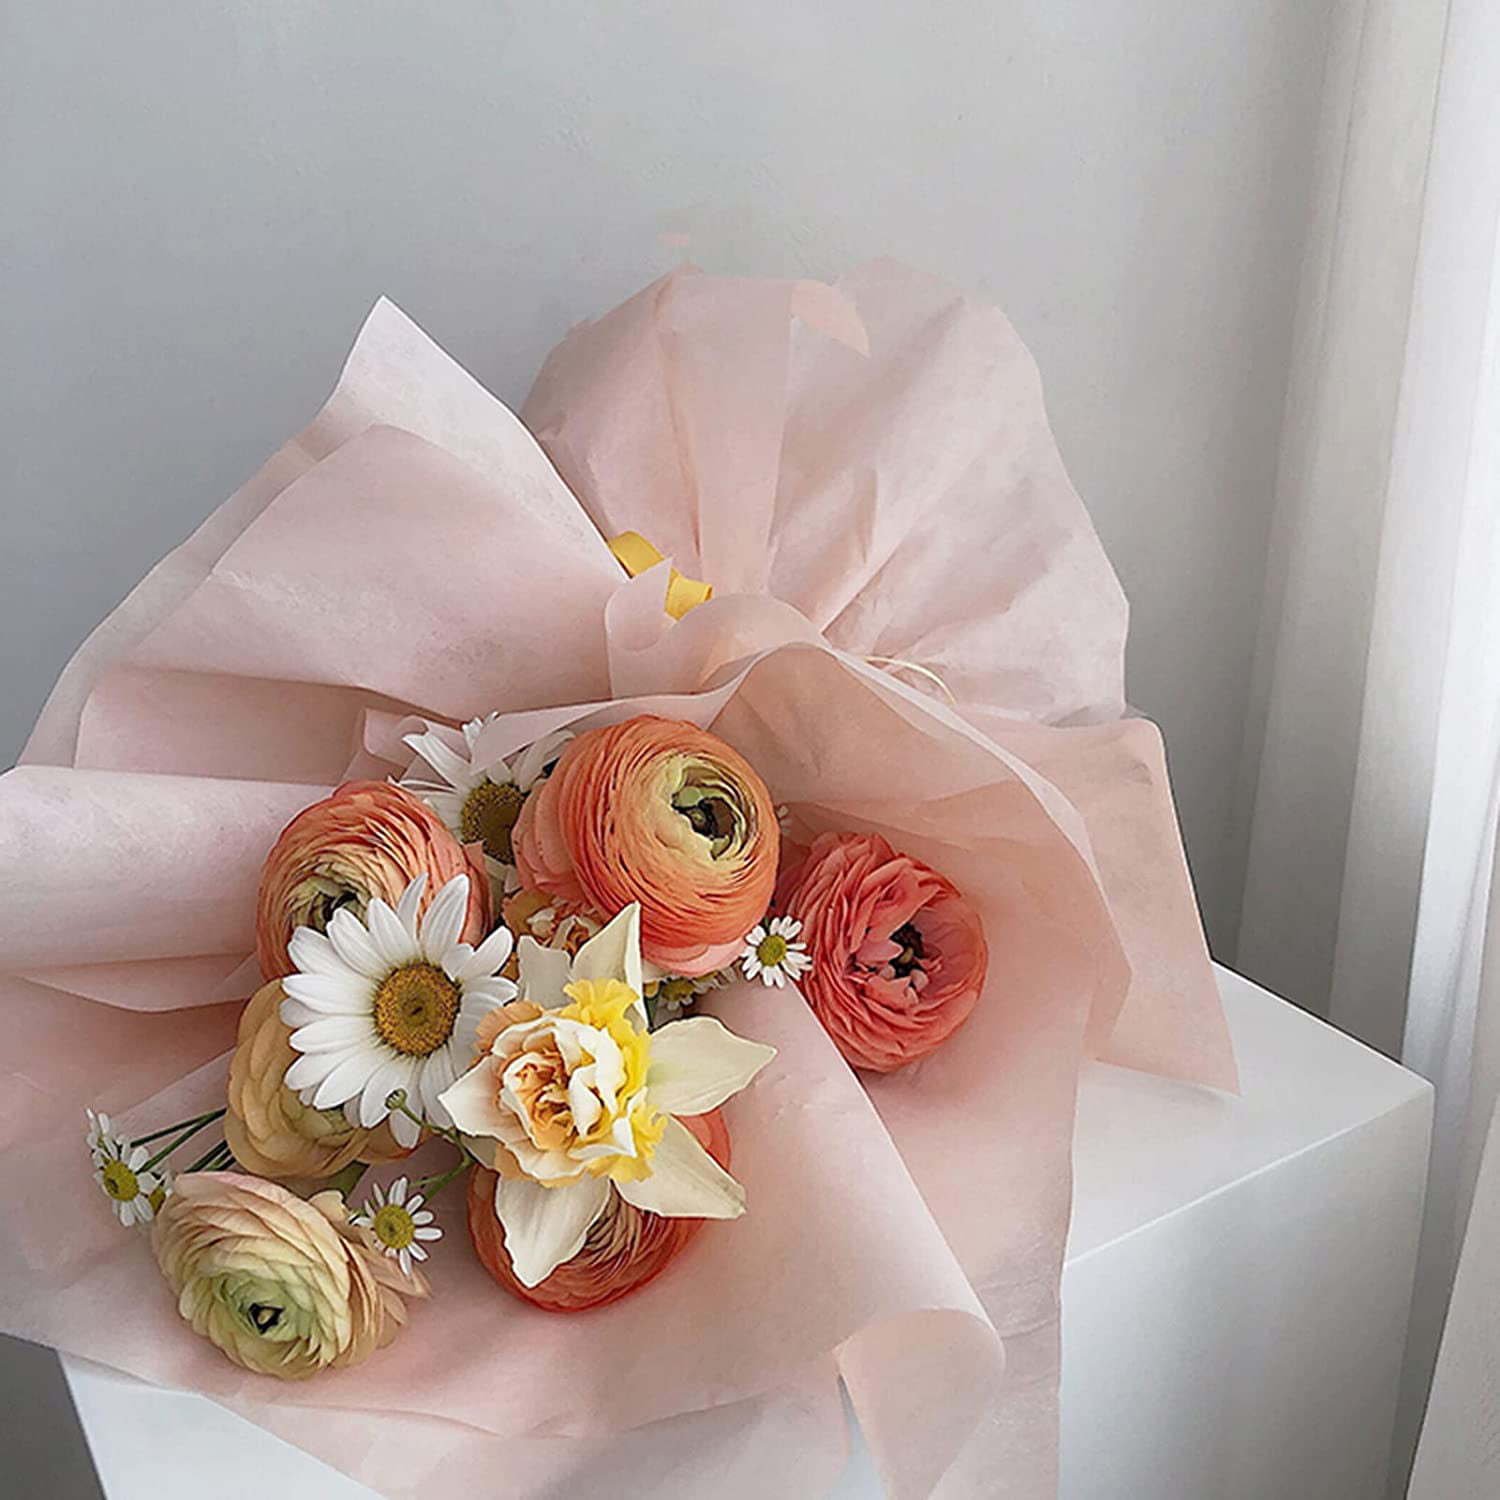 Korean Wrapping Paper for Flower Bouquet Design #flowerbouquet #flower